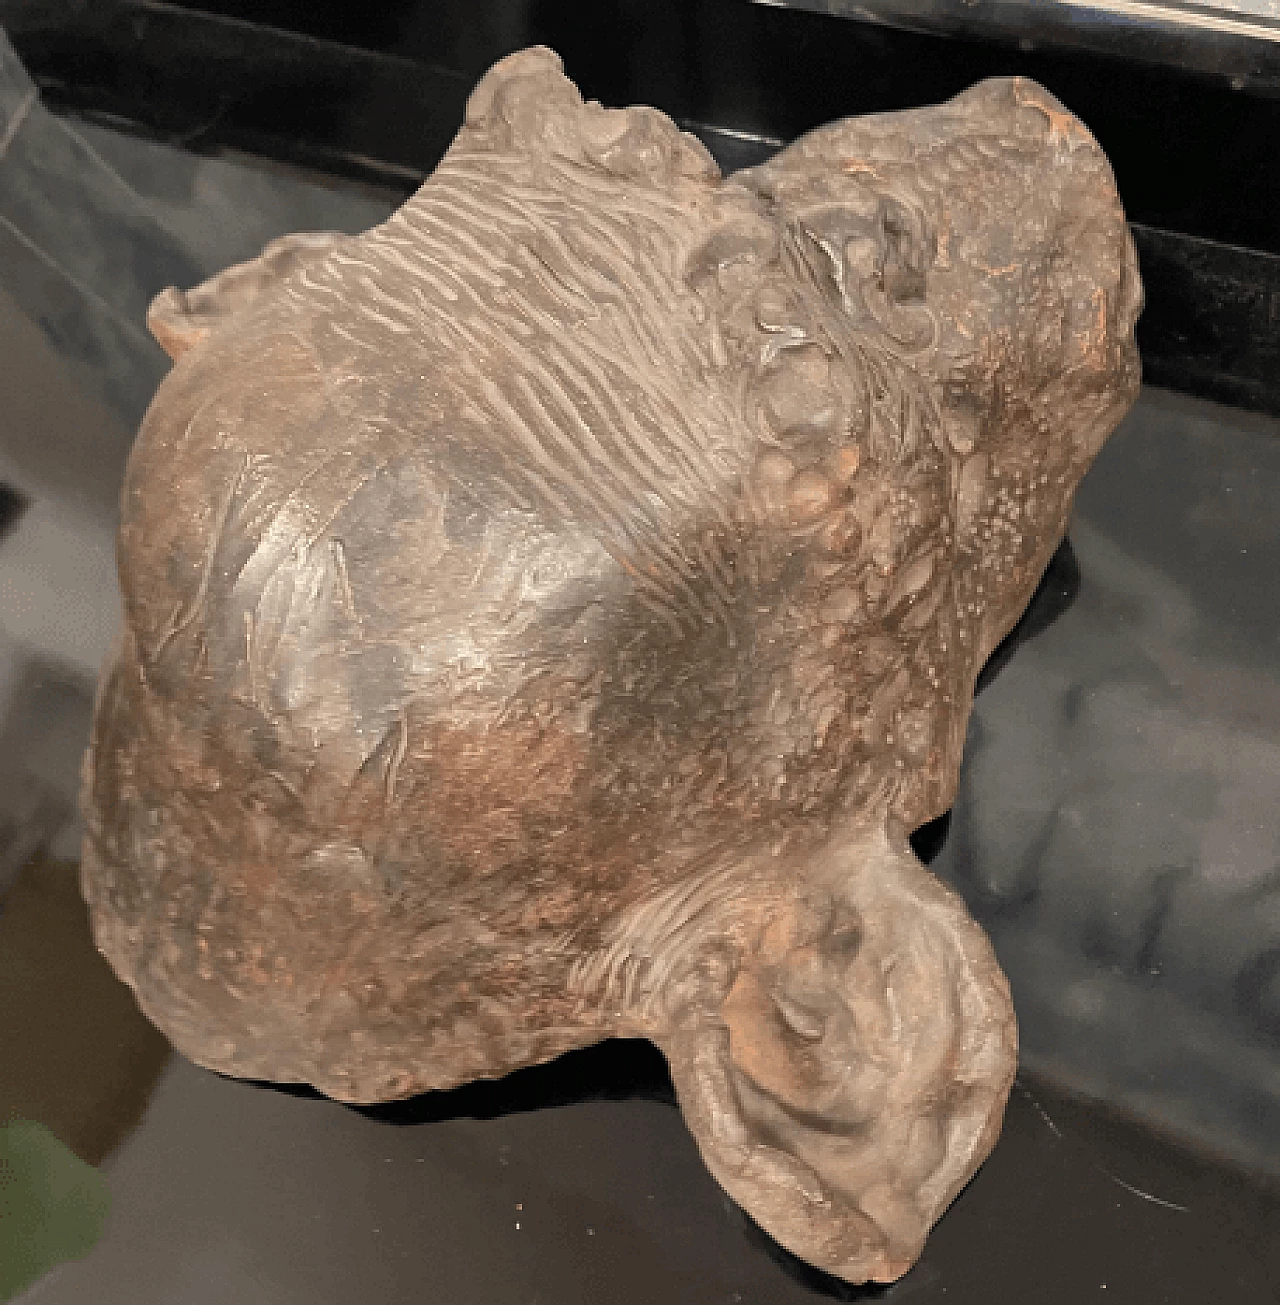 Angelo Zanella, bonobo monkey head, terracotta sculpture, 2019 9